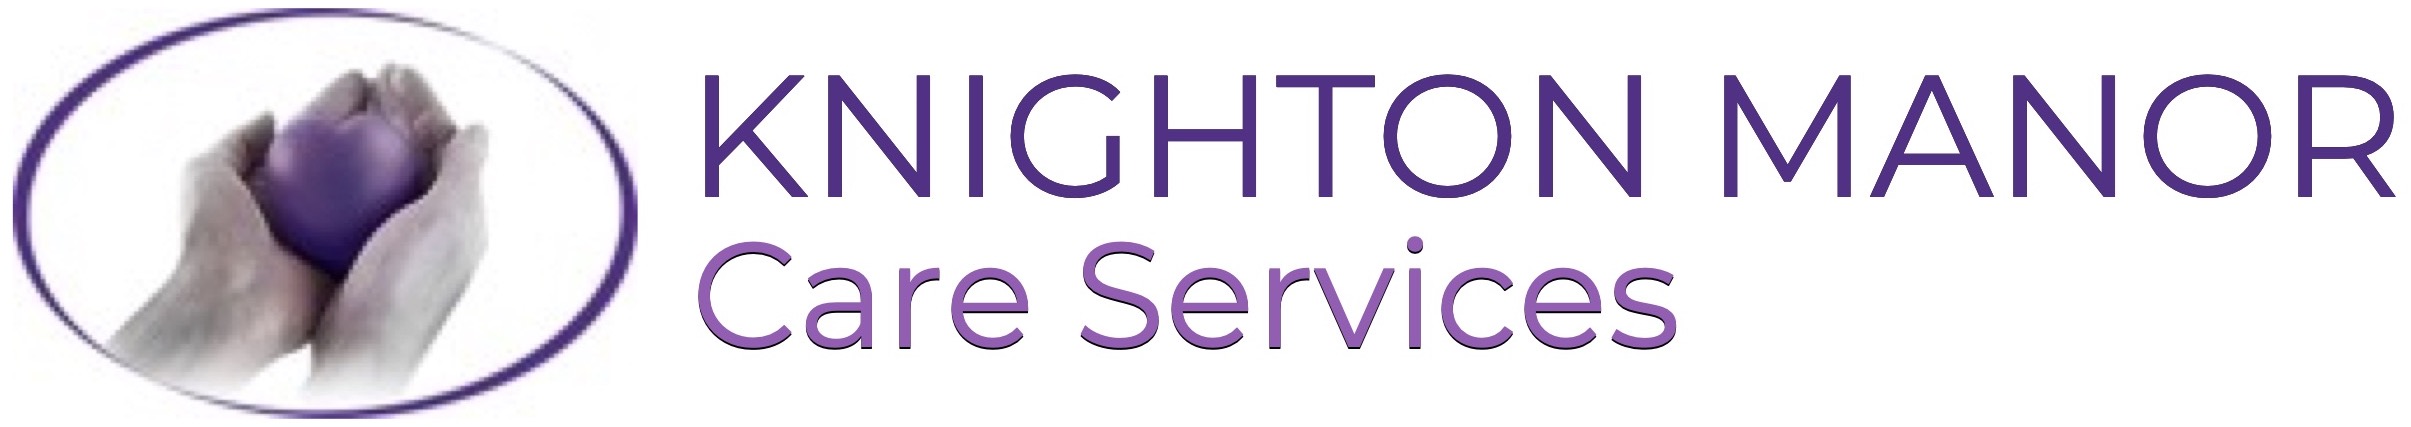 Knighton manor logo